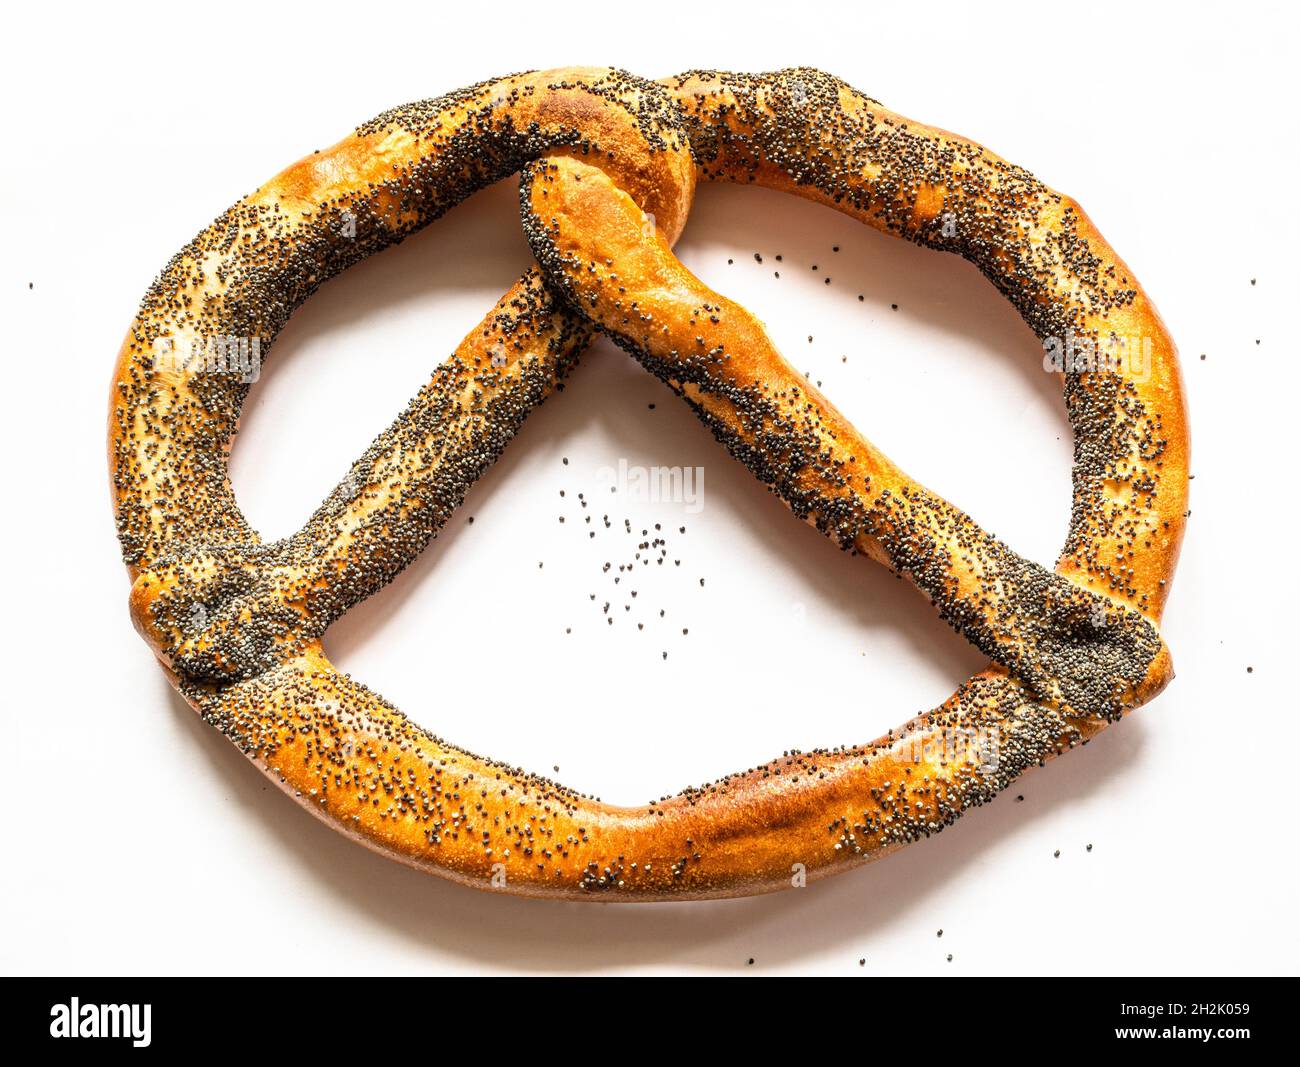 single pretzel sprinkled with poppy seeds on white paper background Stock Photo